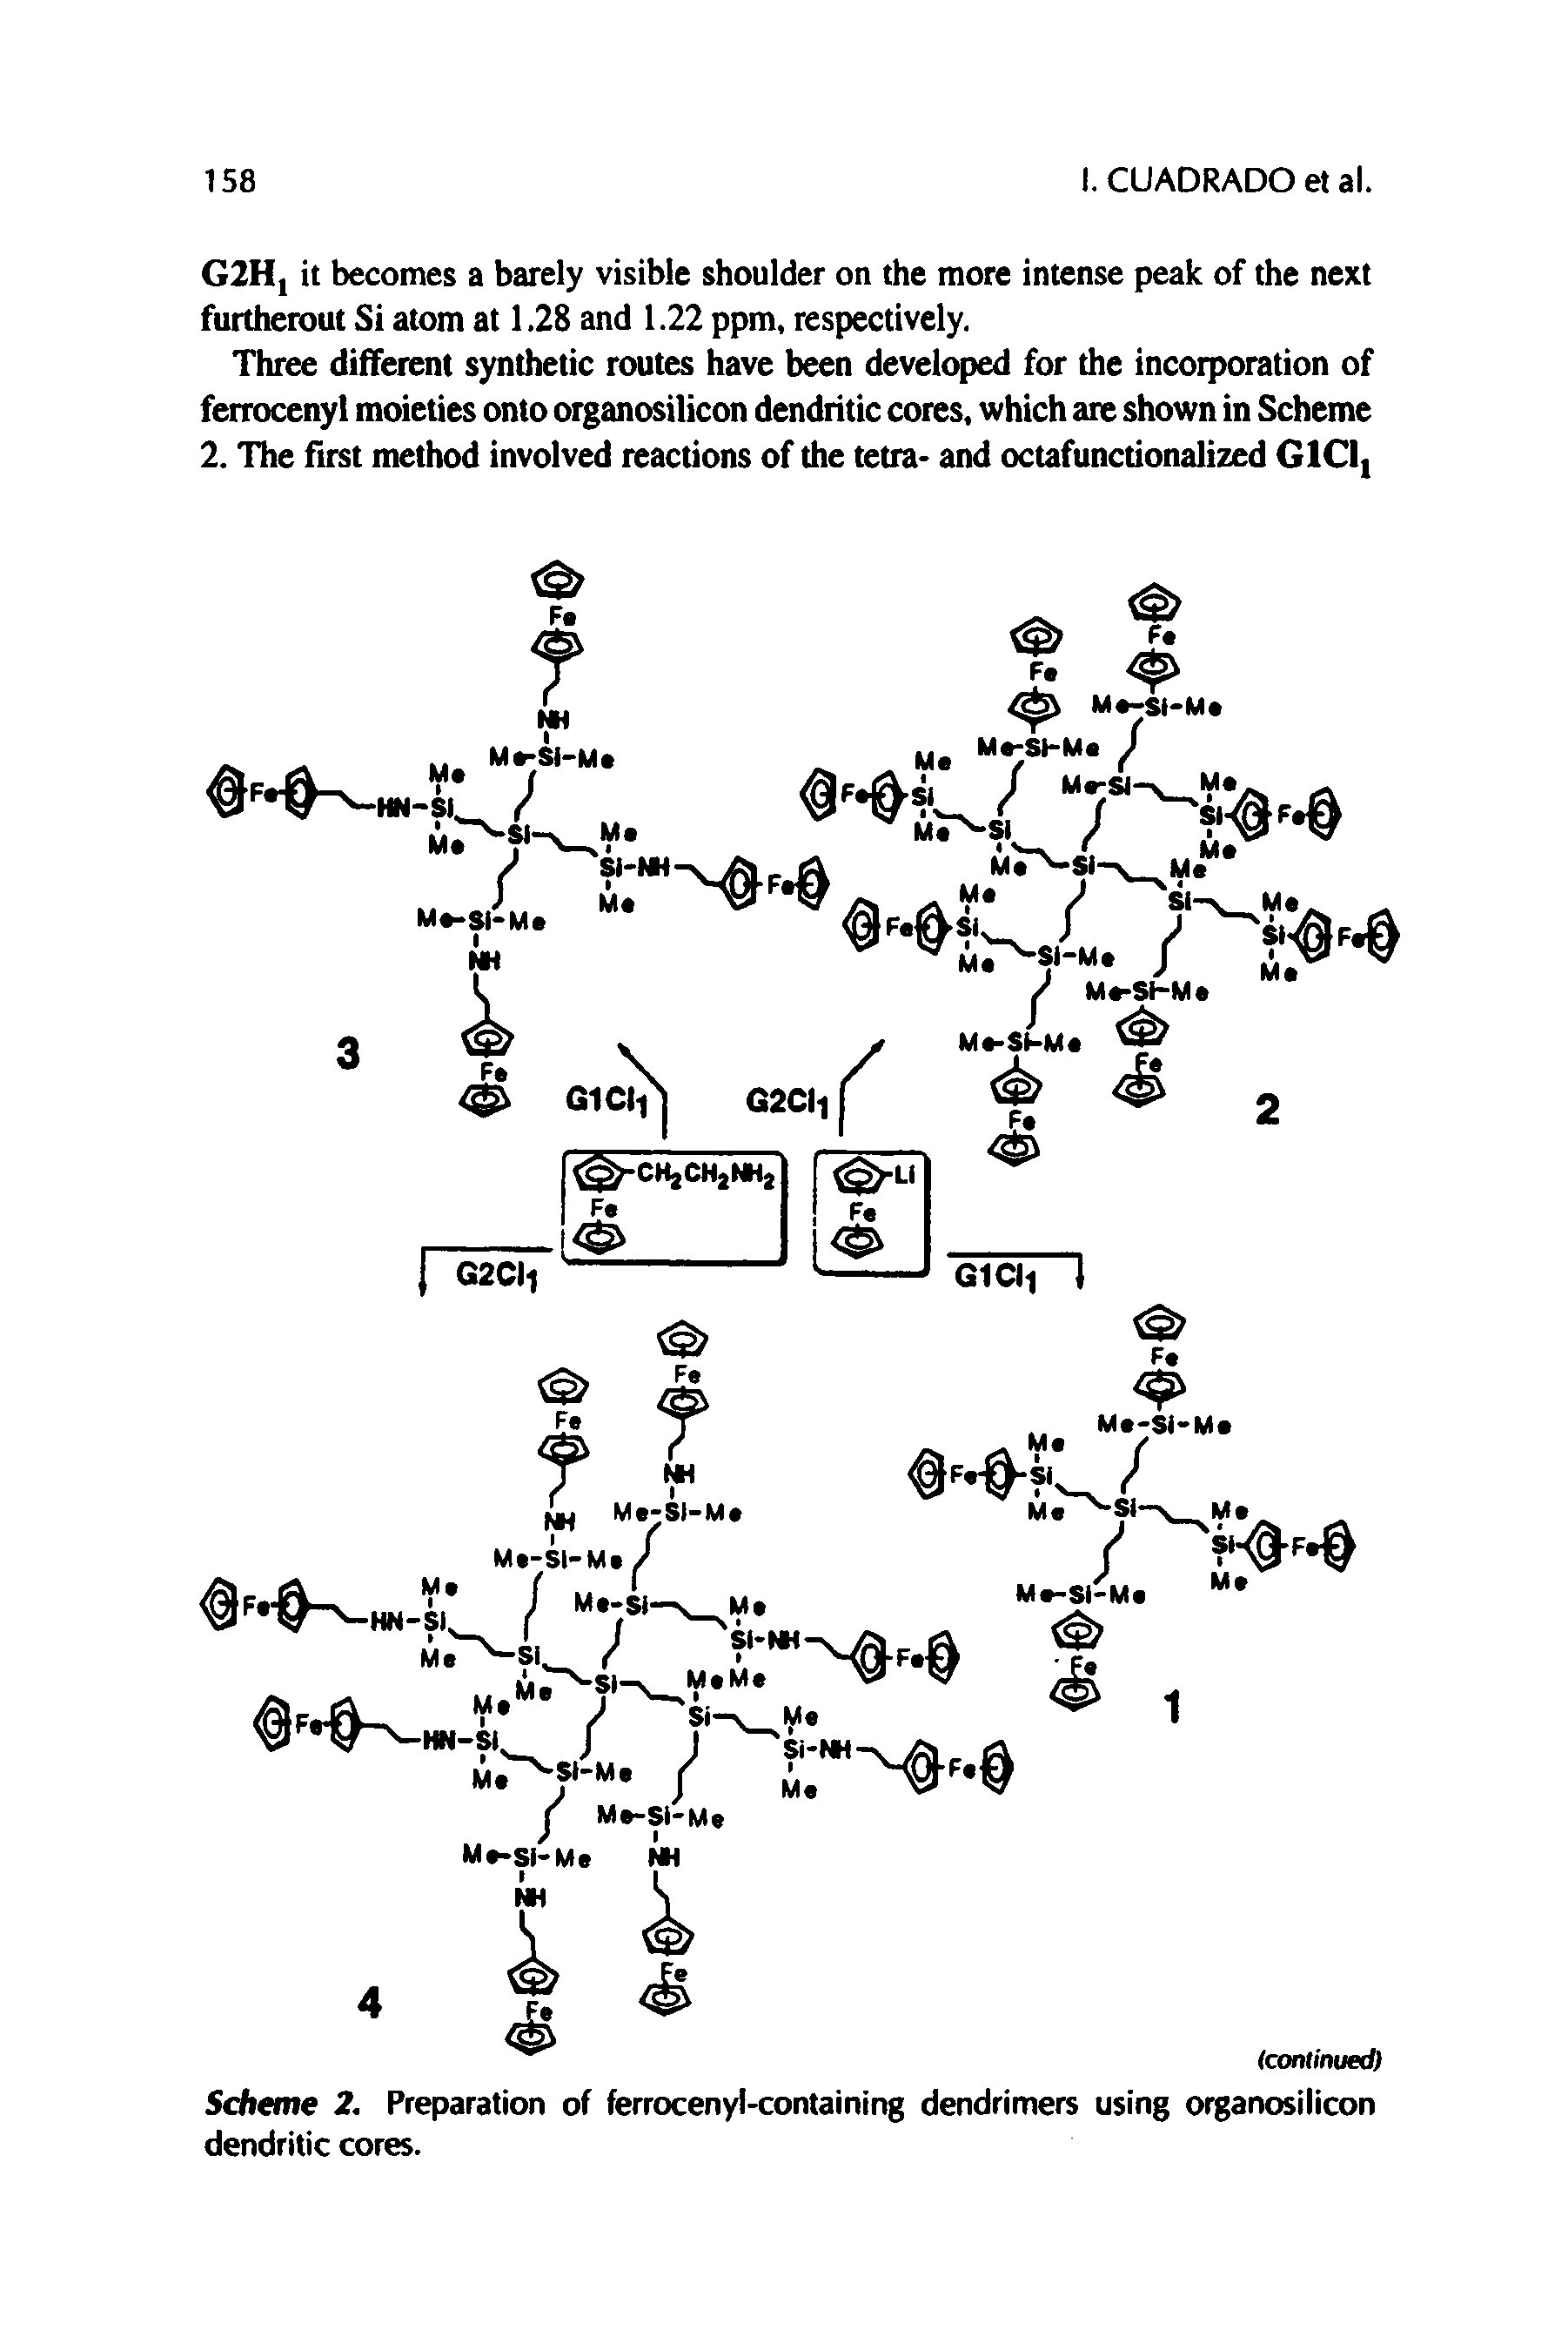 Scheme 2. Preparation of ferrocenyl-containing dendrimers using organosilicon dendritic cores.